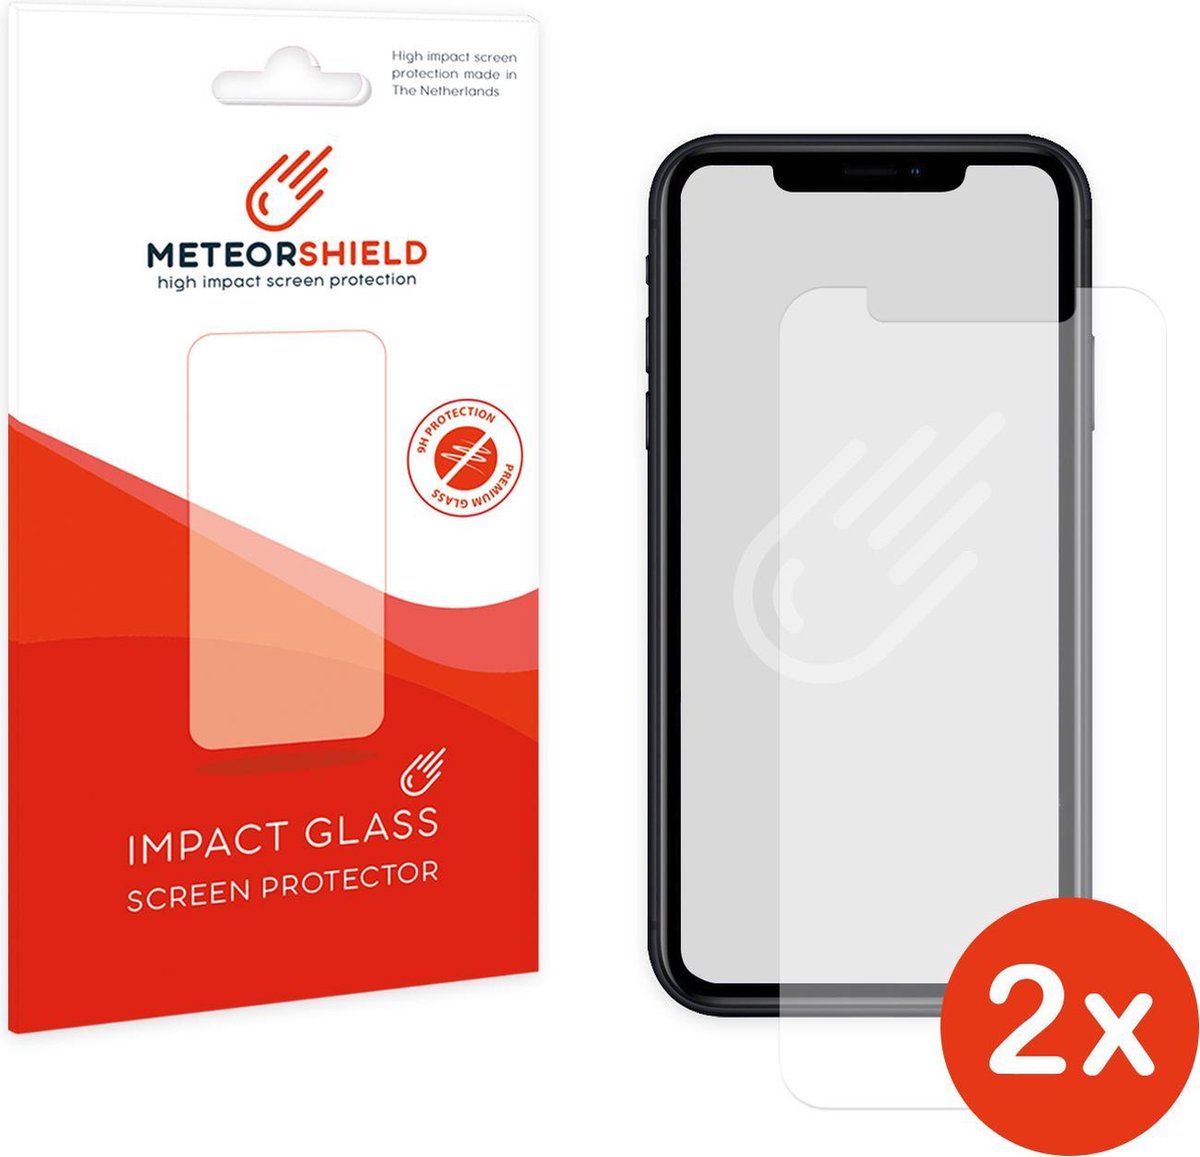 2 stuks: Meteorshield iPhone Xr screenprotector - Ultra clear impact glass